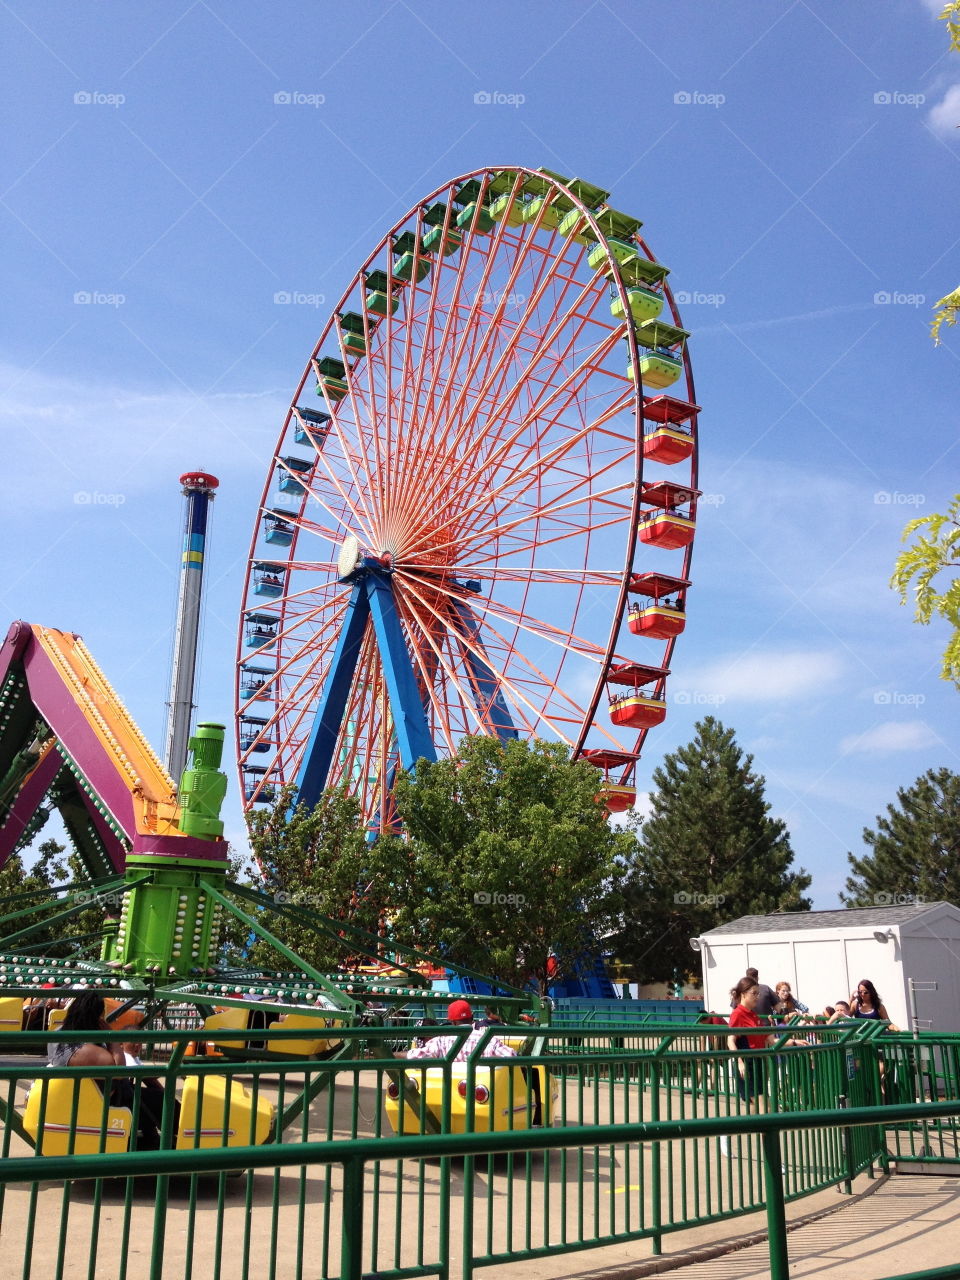 Ferris Wheel. Cedar Point
Sandusky, Ohio